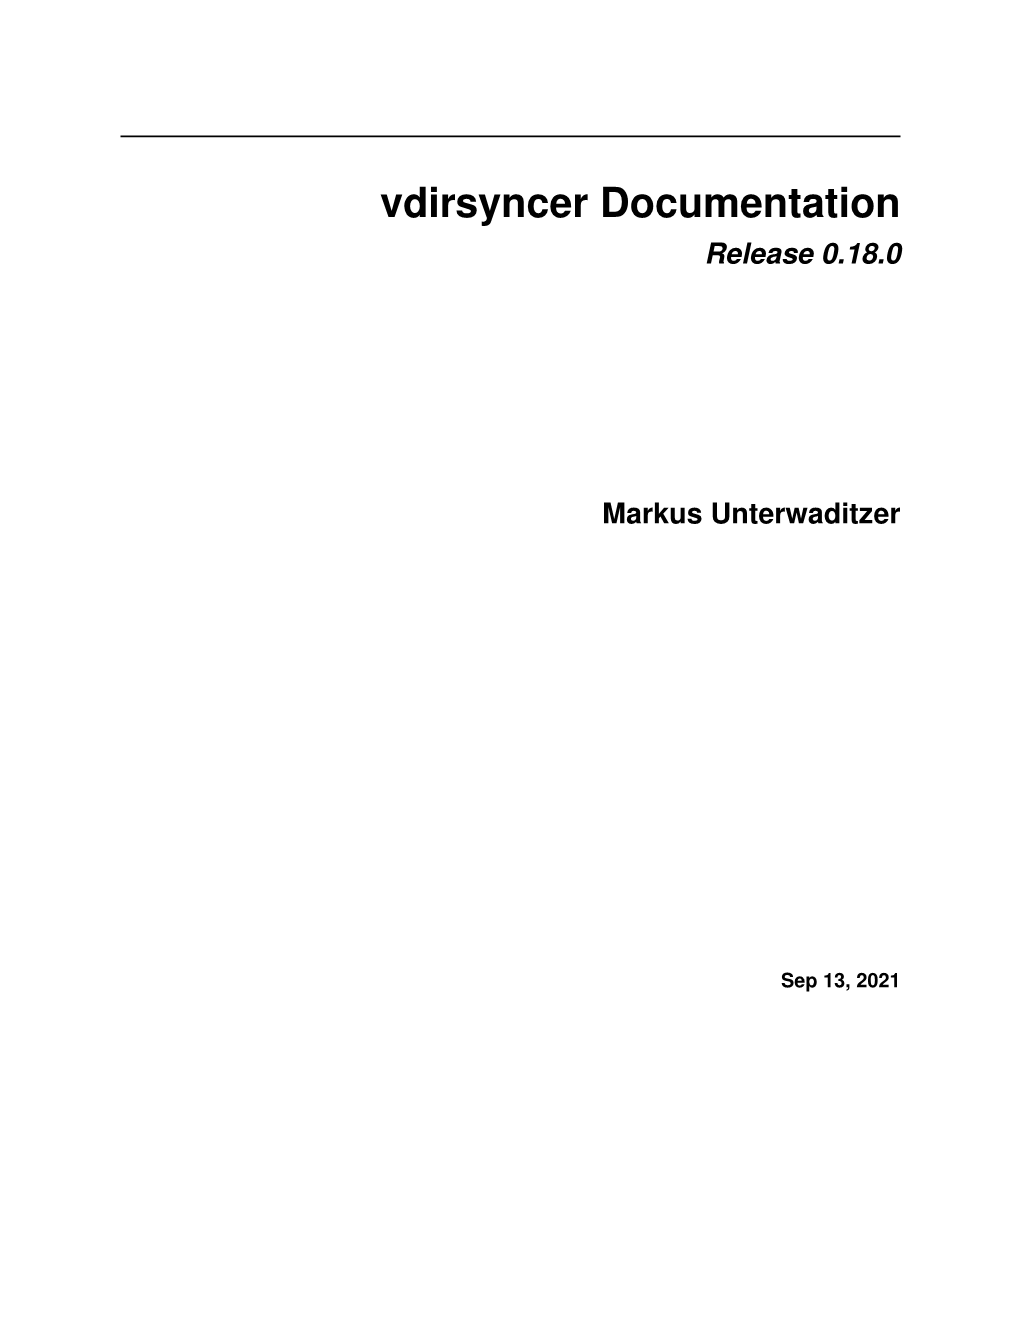 Vdirsyncer Documentation Release 0.18.0